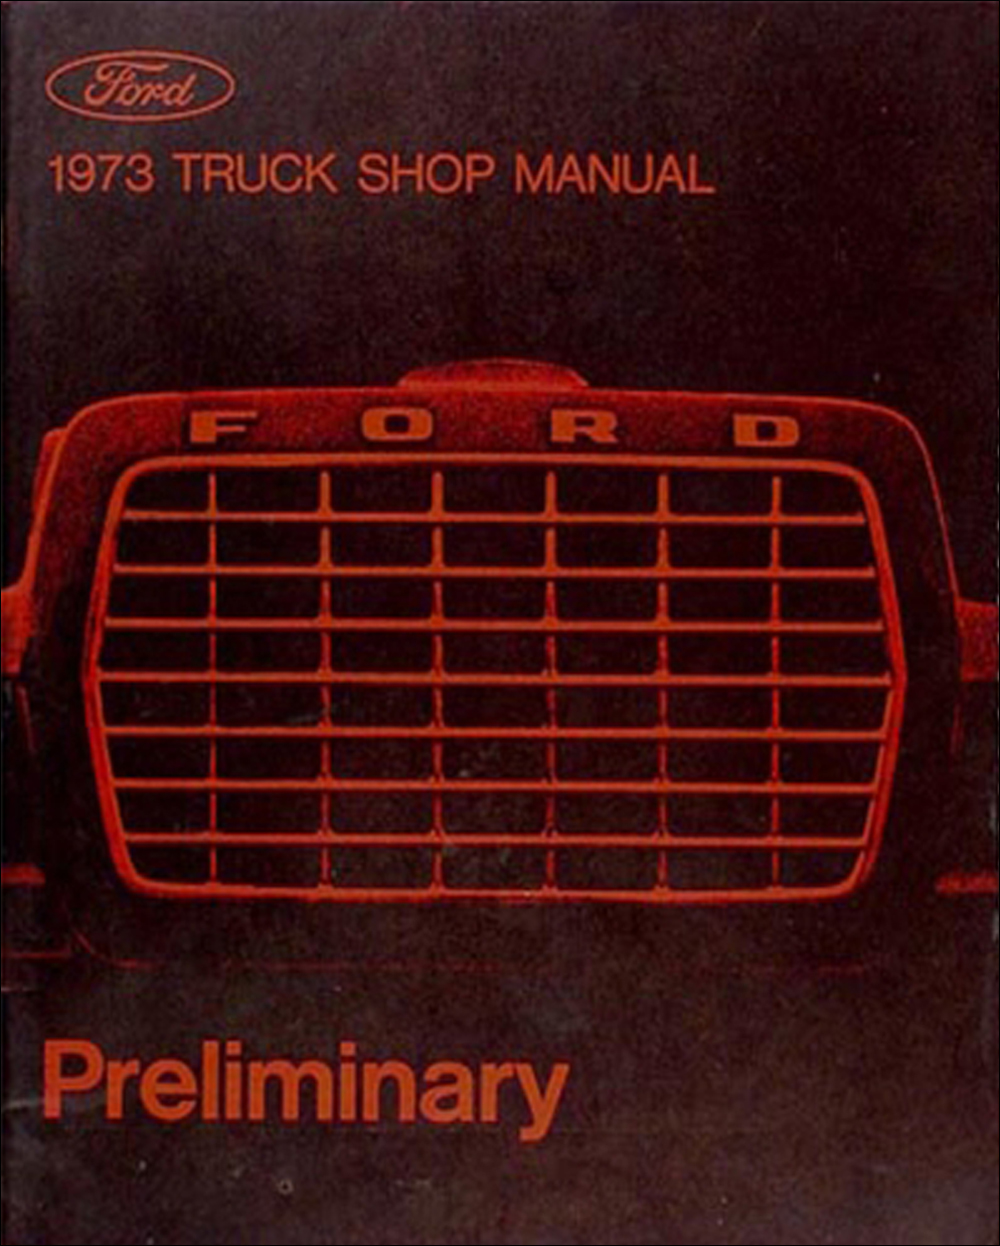 1973 Ford Truck Preliminary Shop Manual Original